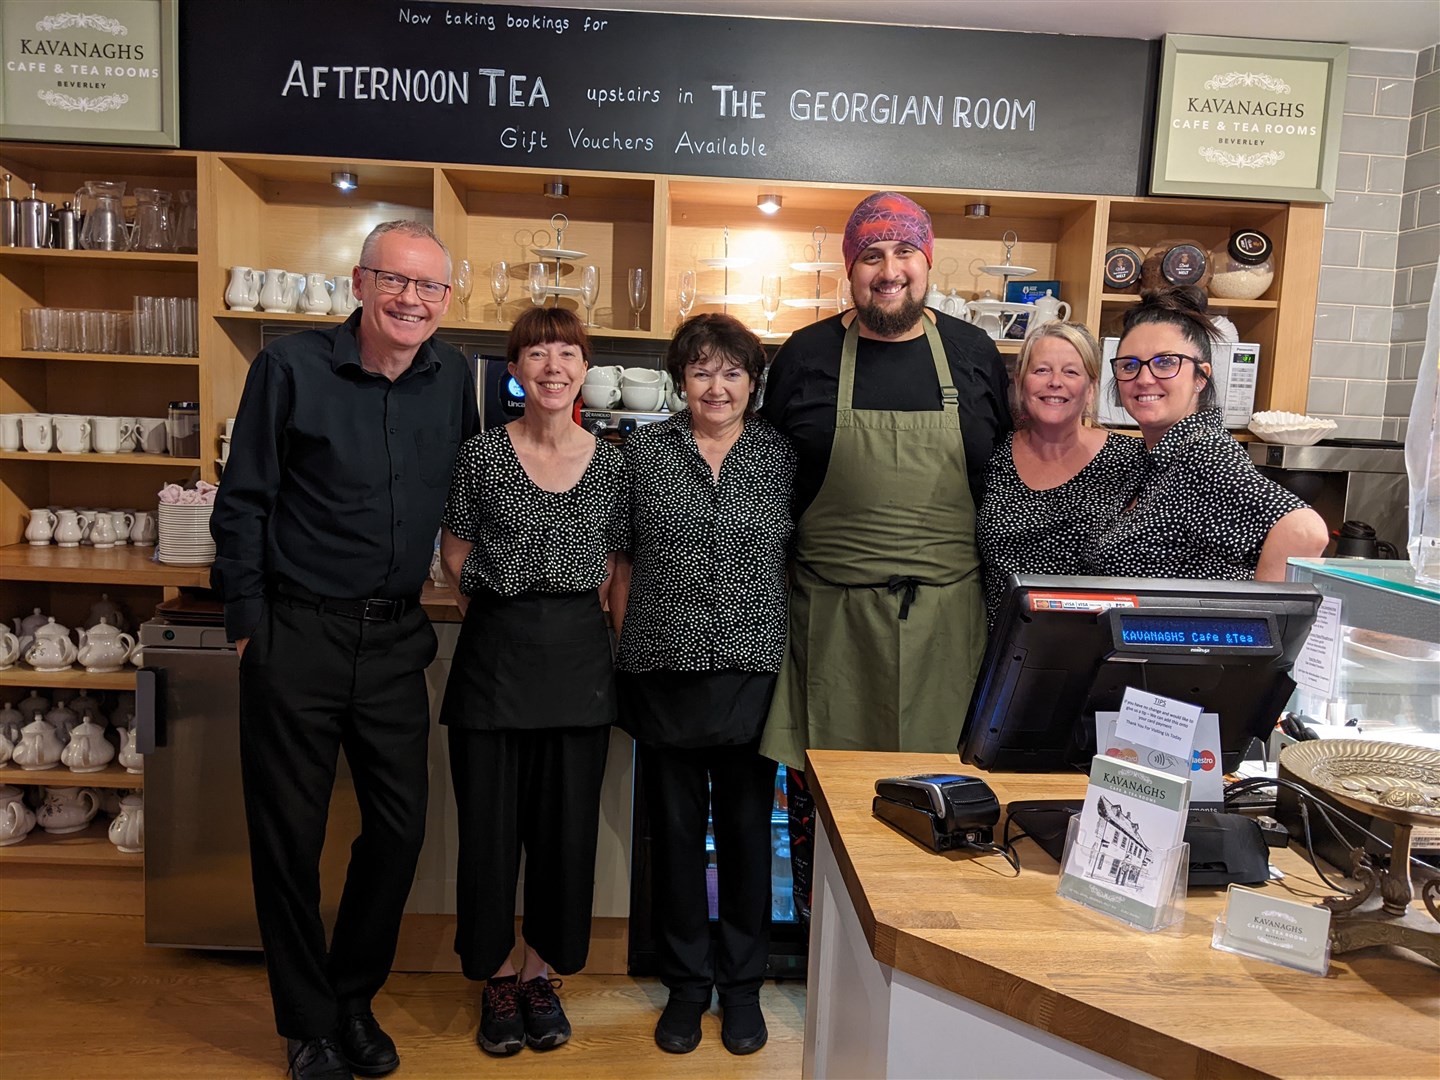 Robert Chapman (far left), alongside Kavanagh’s cafe and tea rooms colleagues Cath Green, Heather Morgan, Ricky Boreham, Kat Simpson, Gemma Wilde (Robert Chapman/PA)